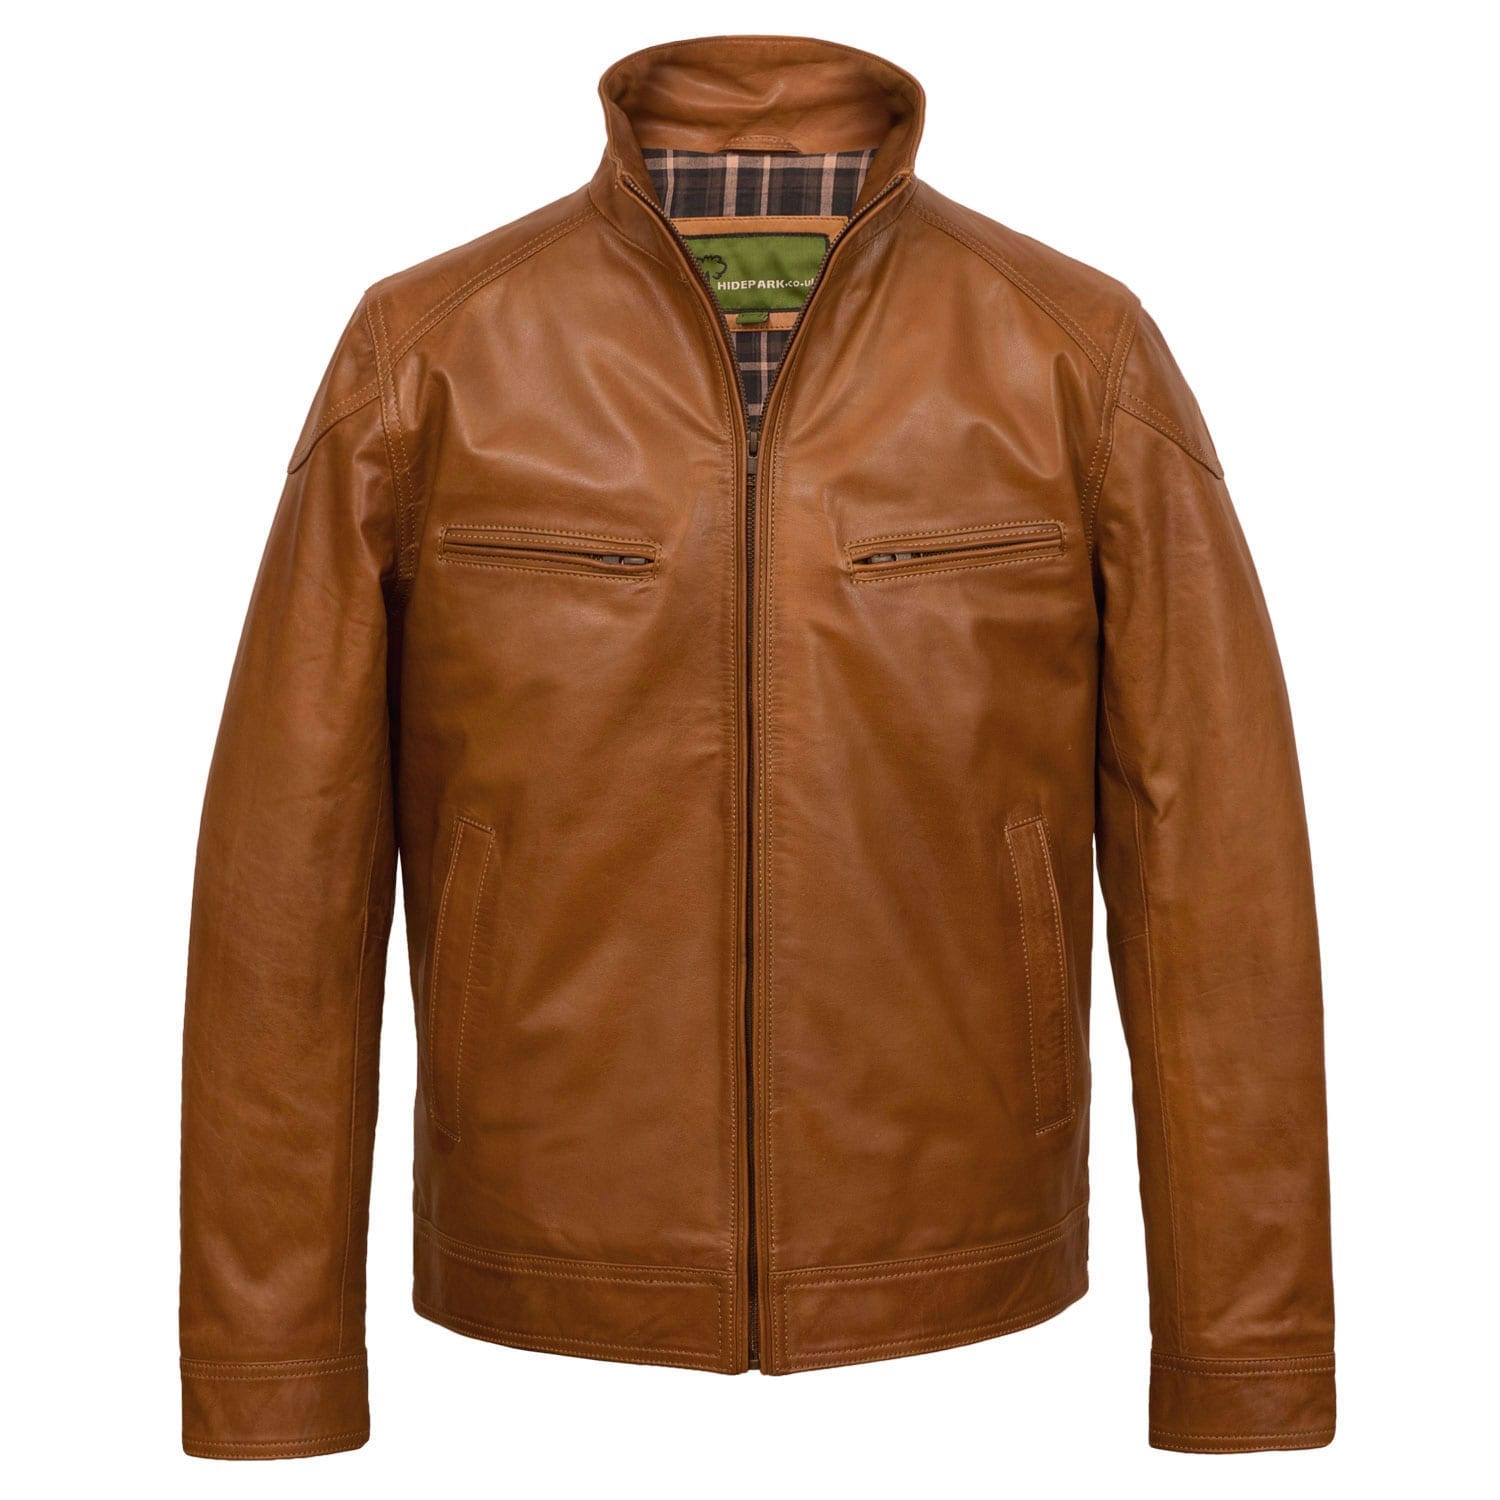 Matt: Men's Tan Leather Jacket